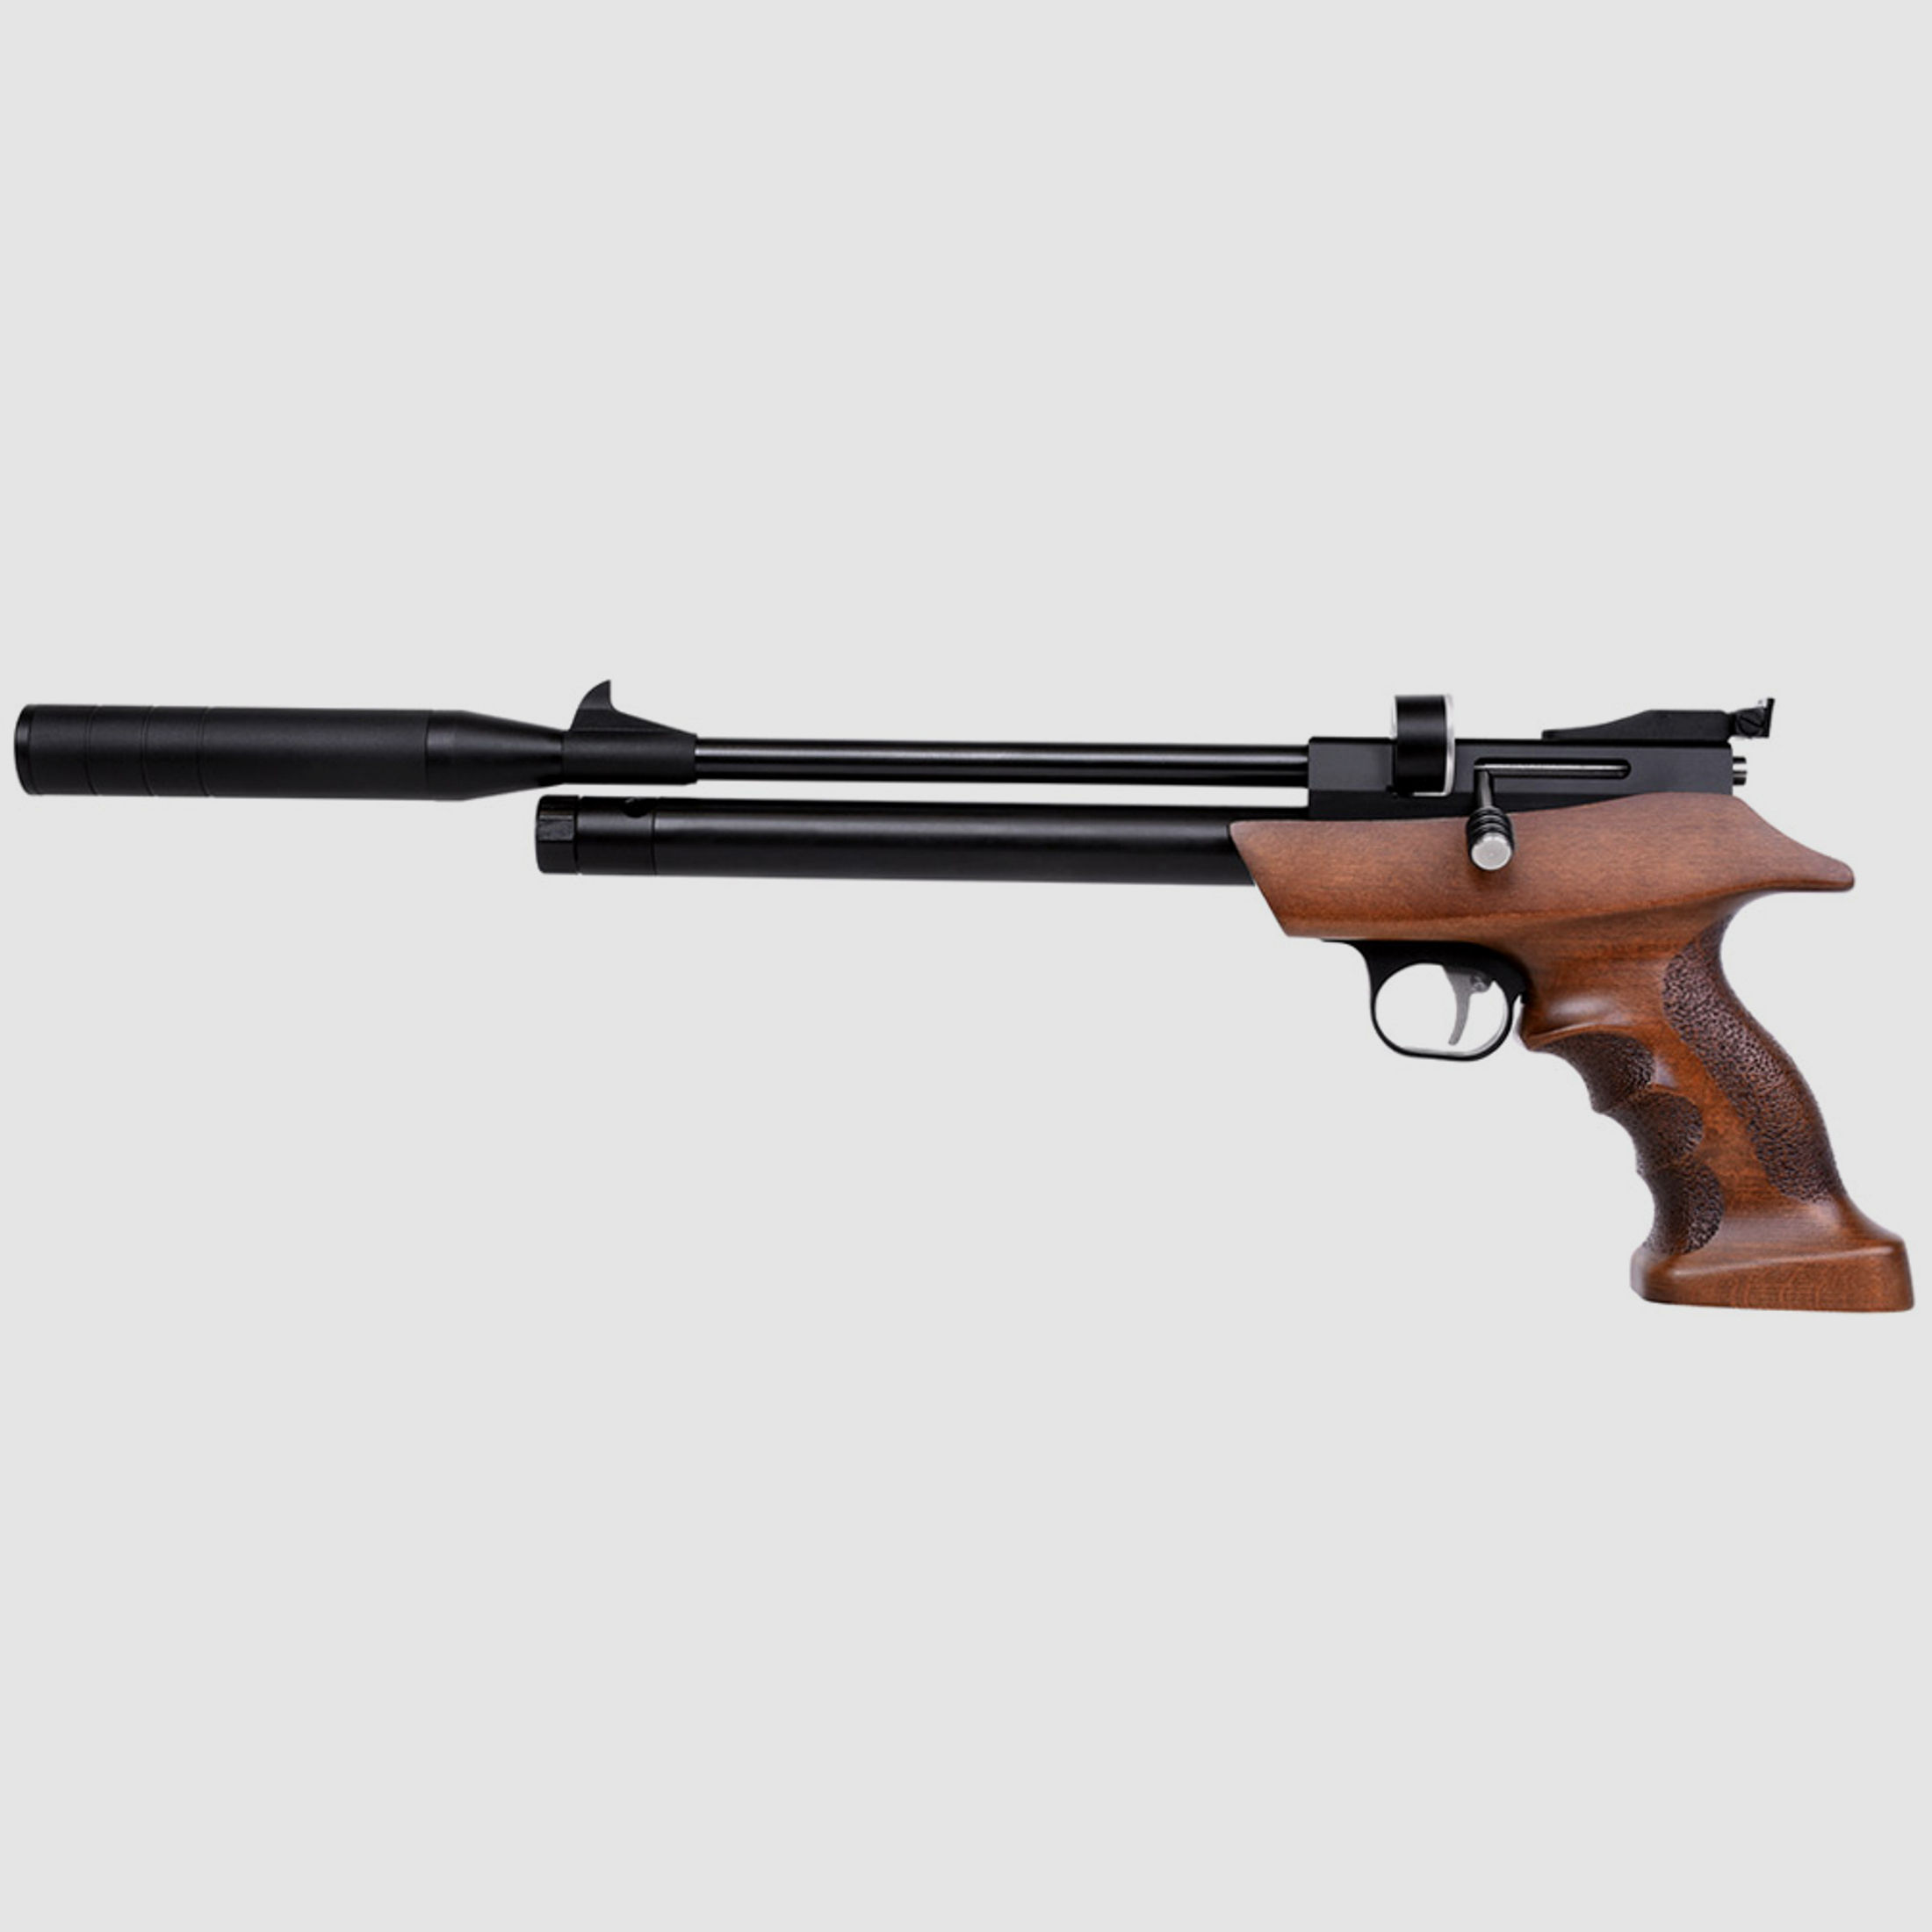 Pressluftpistole Diana bandit Holz Matchgriff mit Fischhaut SchalldĂ¤mpfer Kaliber 5,5 mm Diabolo (P18)